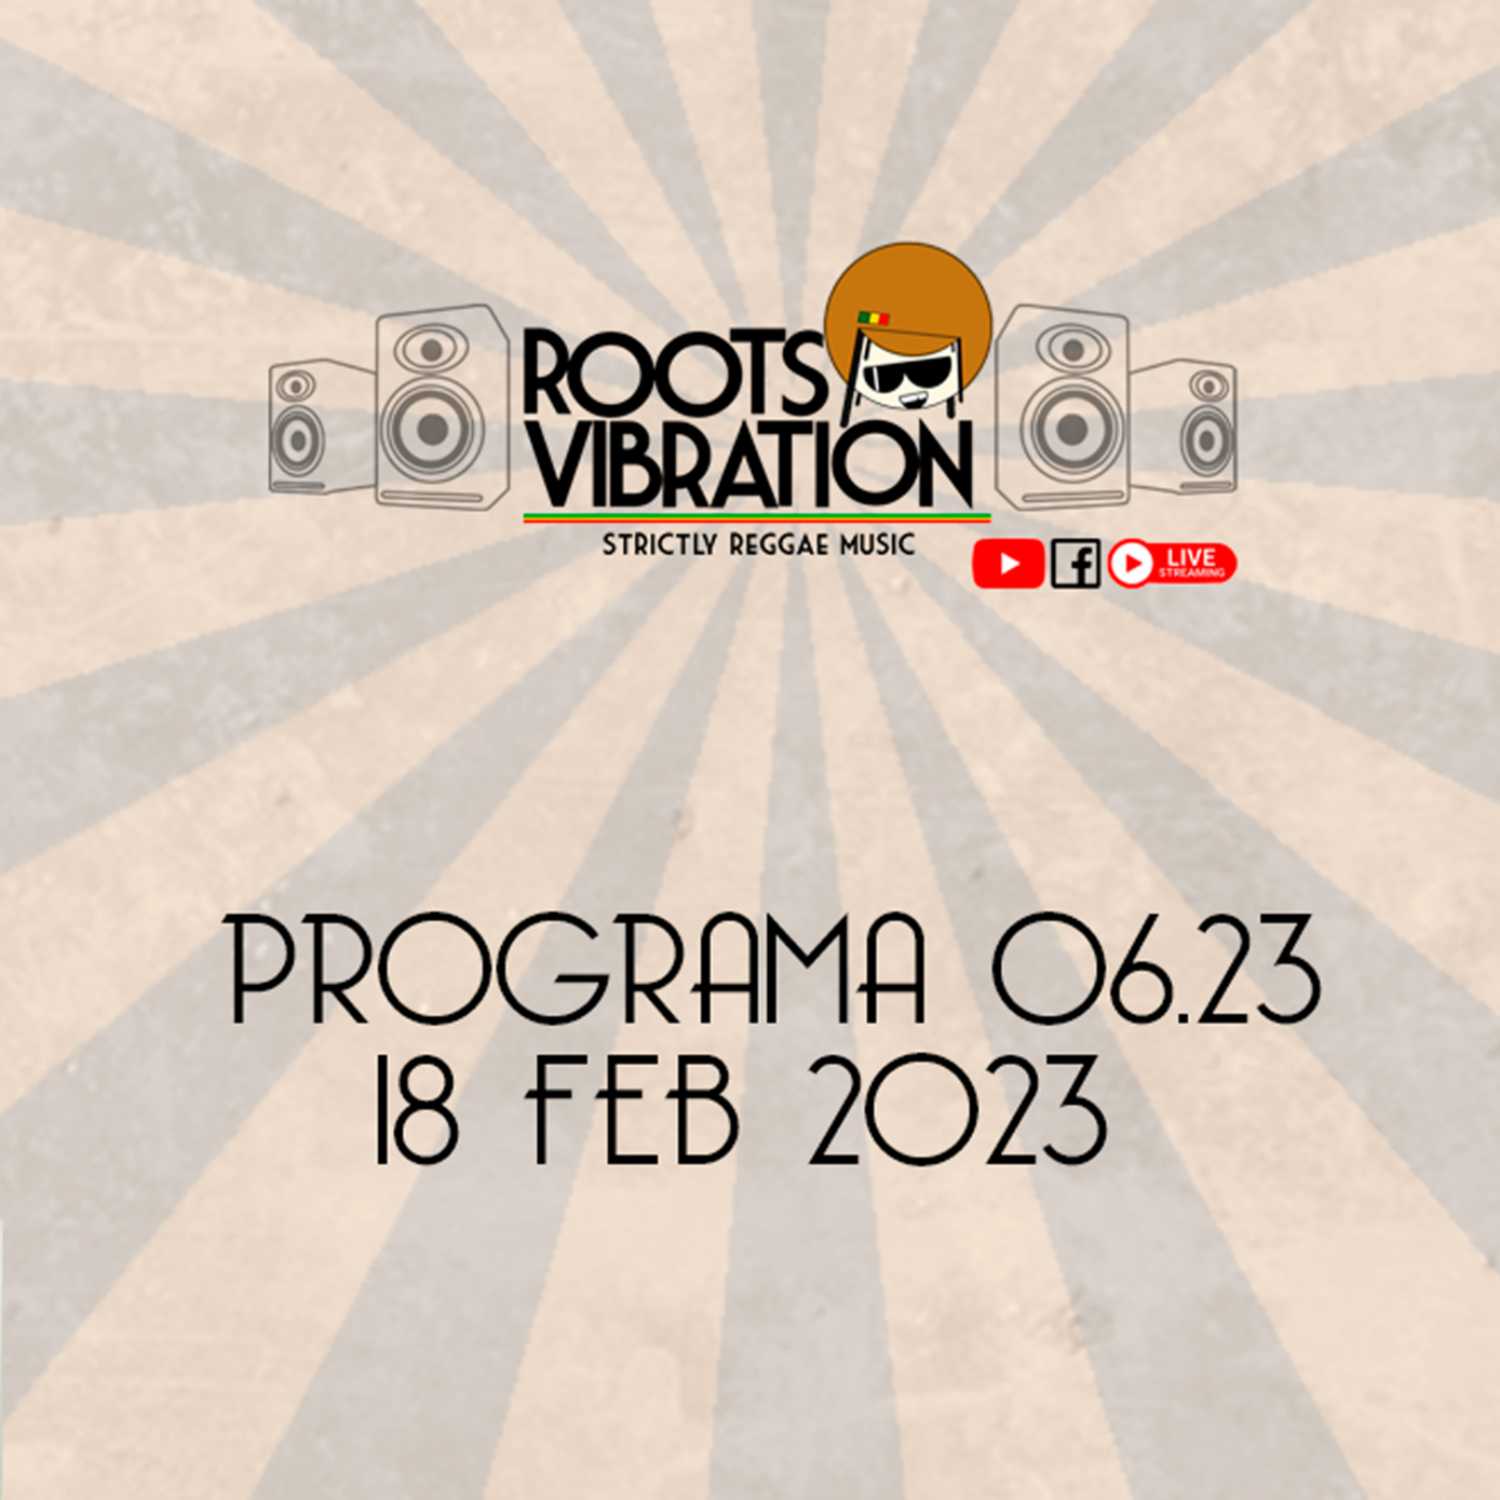 Programa 06.2023 ROOTS VIBRATION